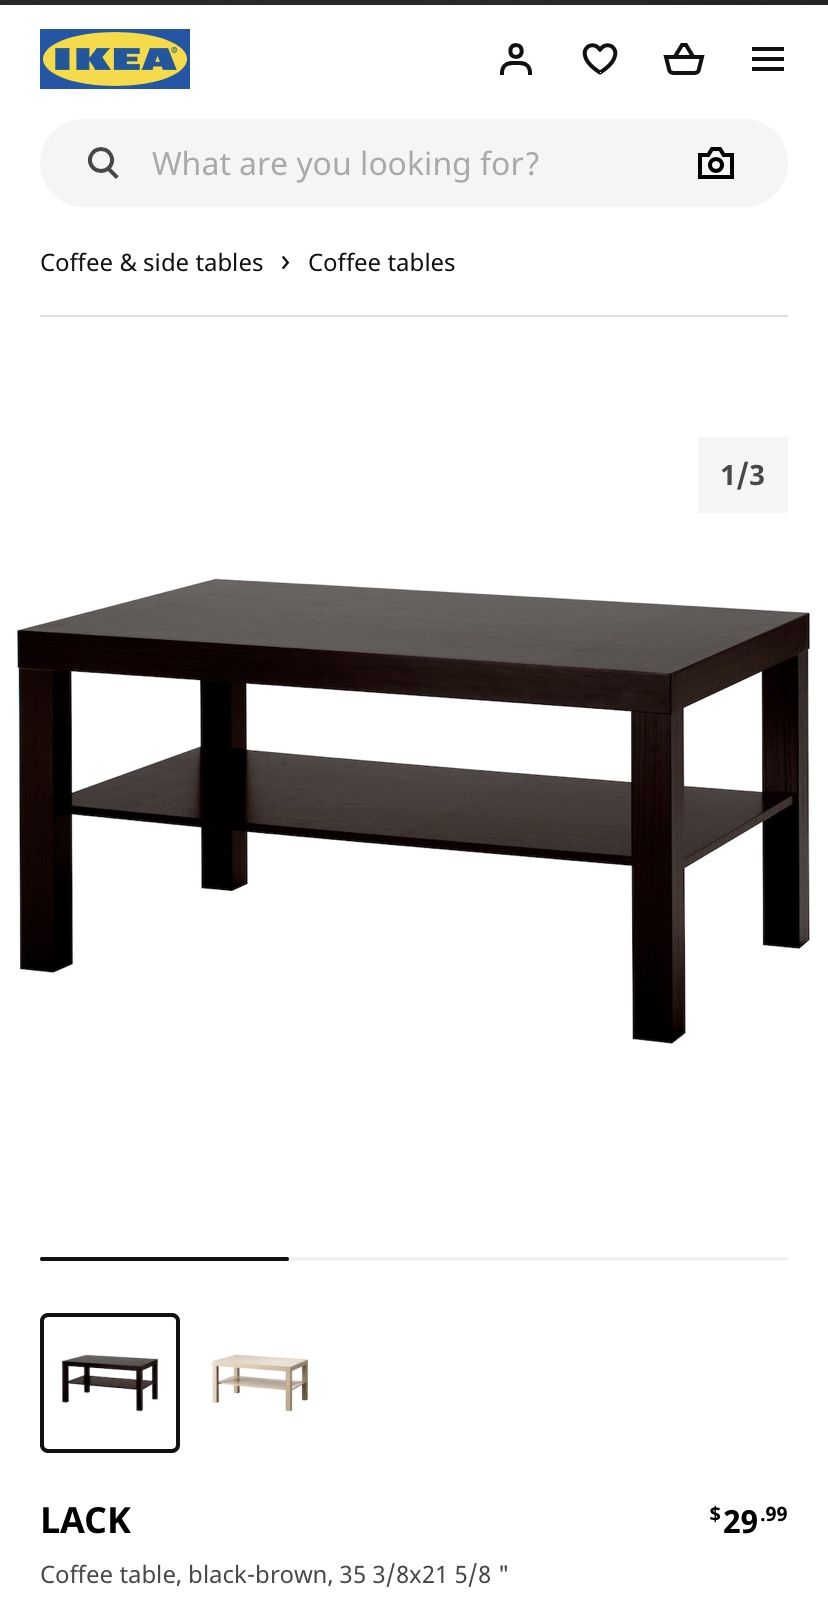 Ikea Lack Coffee Table Black-Brown